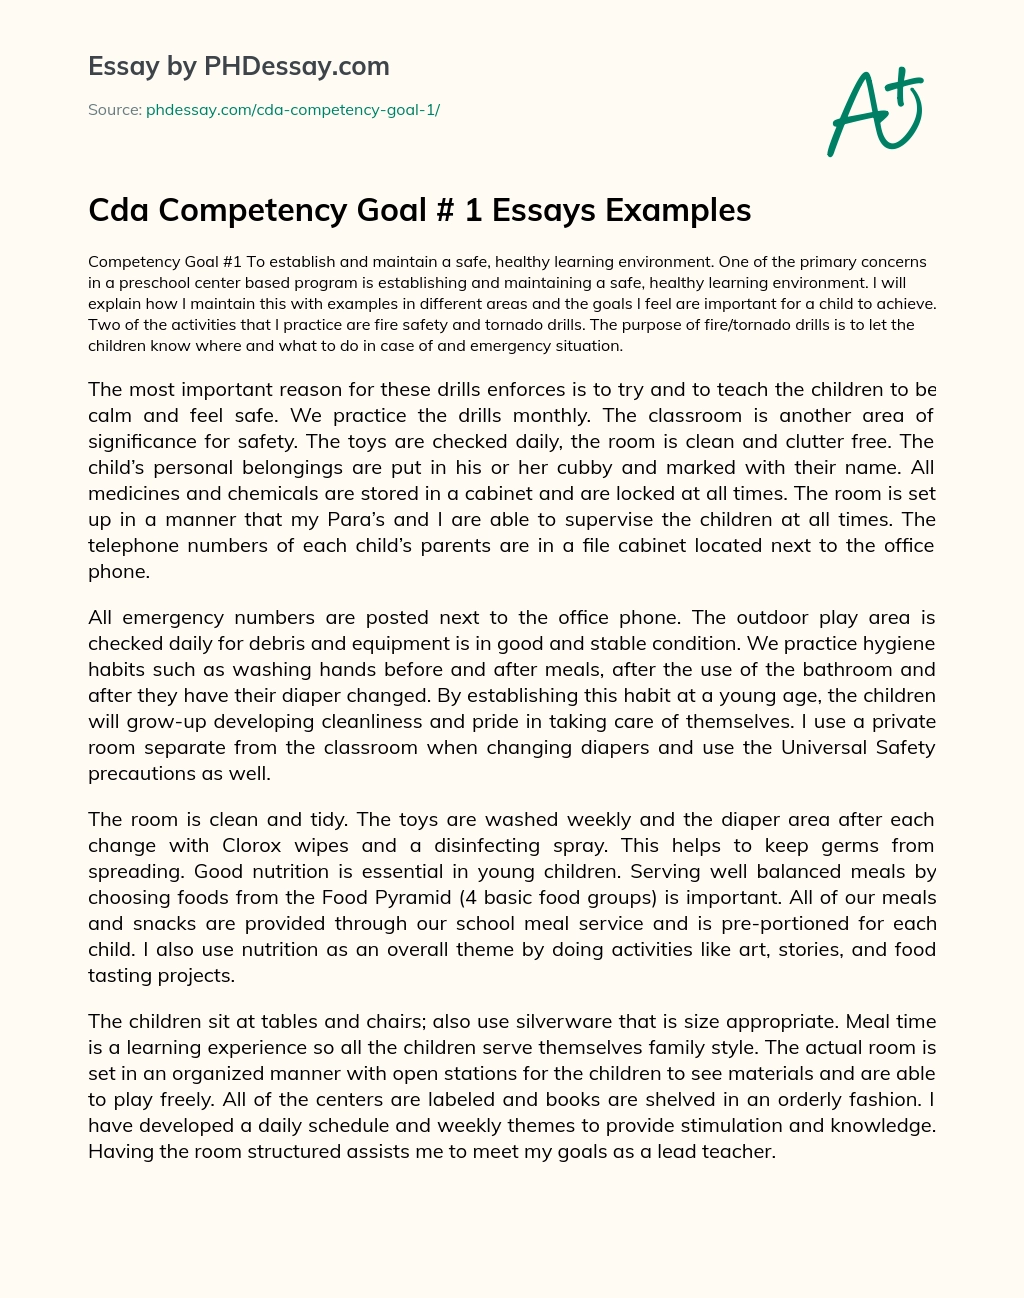 cda competency statements 5